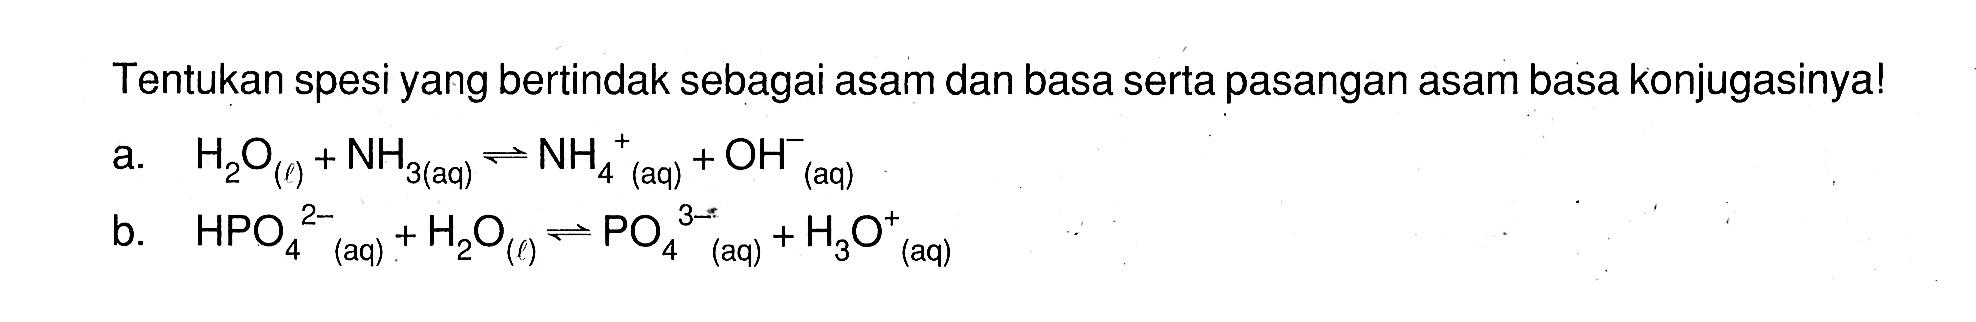 Tentukan spesi yang bertindak sebagai asam dan basa serta pasangan asam basa konjugasinya!a.  H2O(q)+NH3(aq) <=> NH4^+ (aq)  +OH^- (aq) b.   HPO4^(2-)(aq)+H2O(l) <=> PO4^(3-) (aq)  +H3 O( aq )^+ 